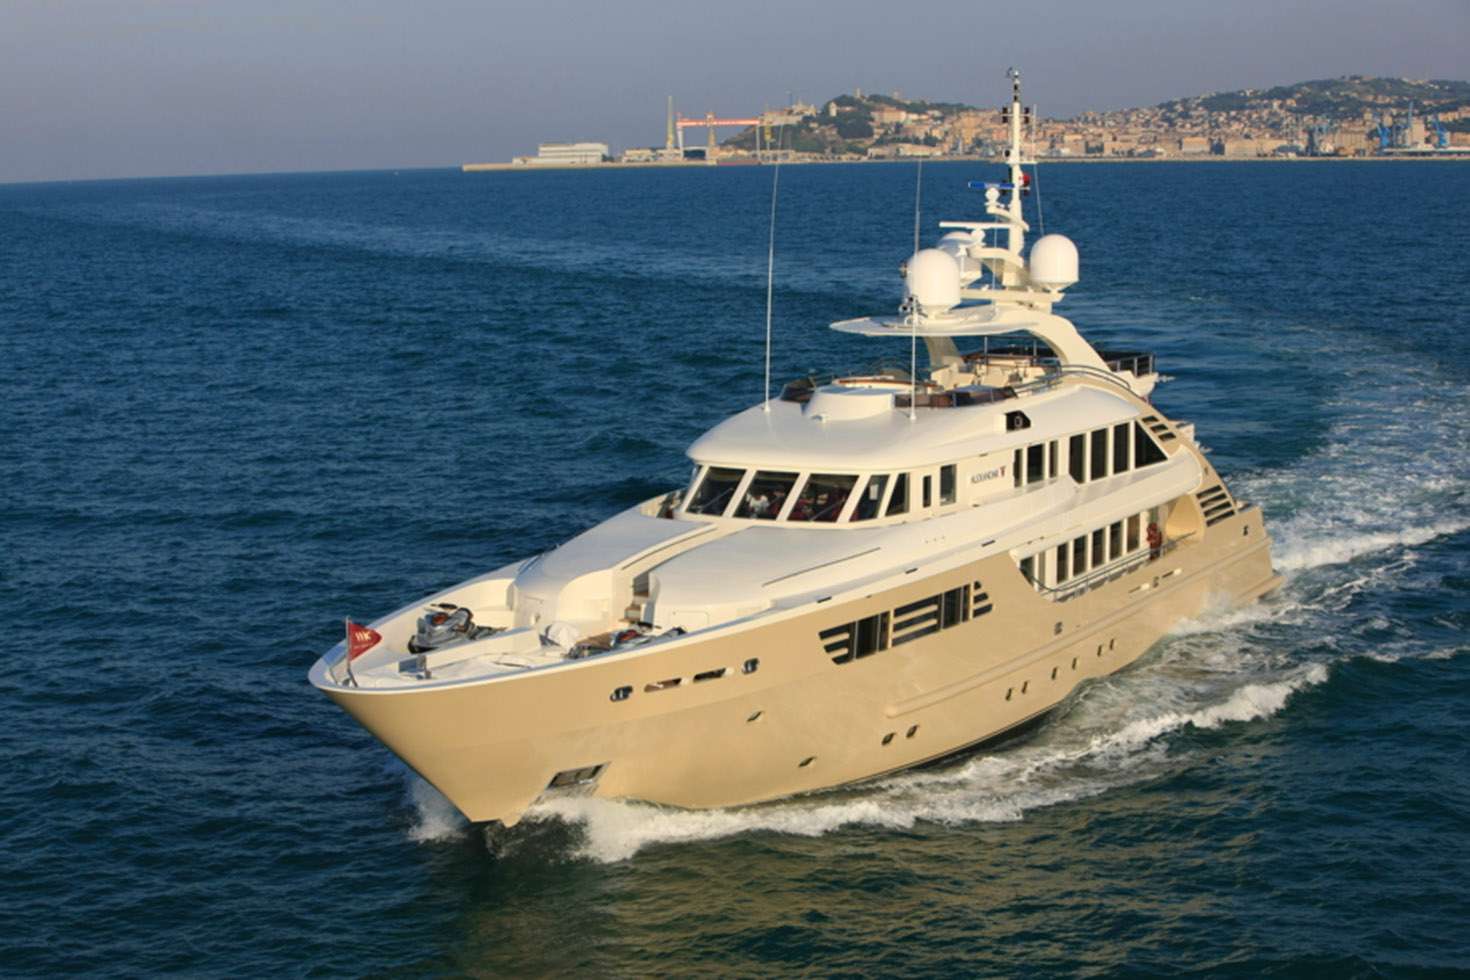 MUSE Yacht • ISA • 2008 • Owner Miodrag Kostic